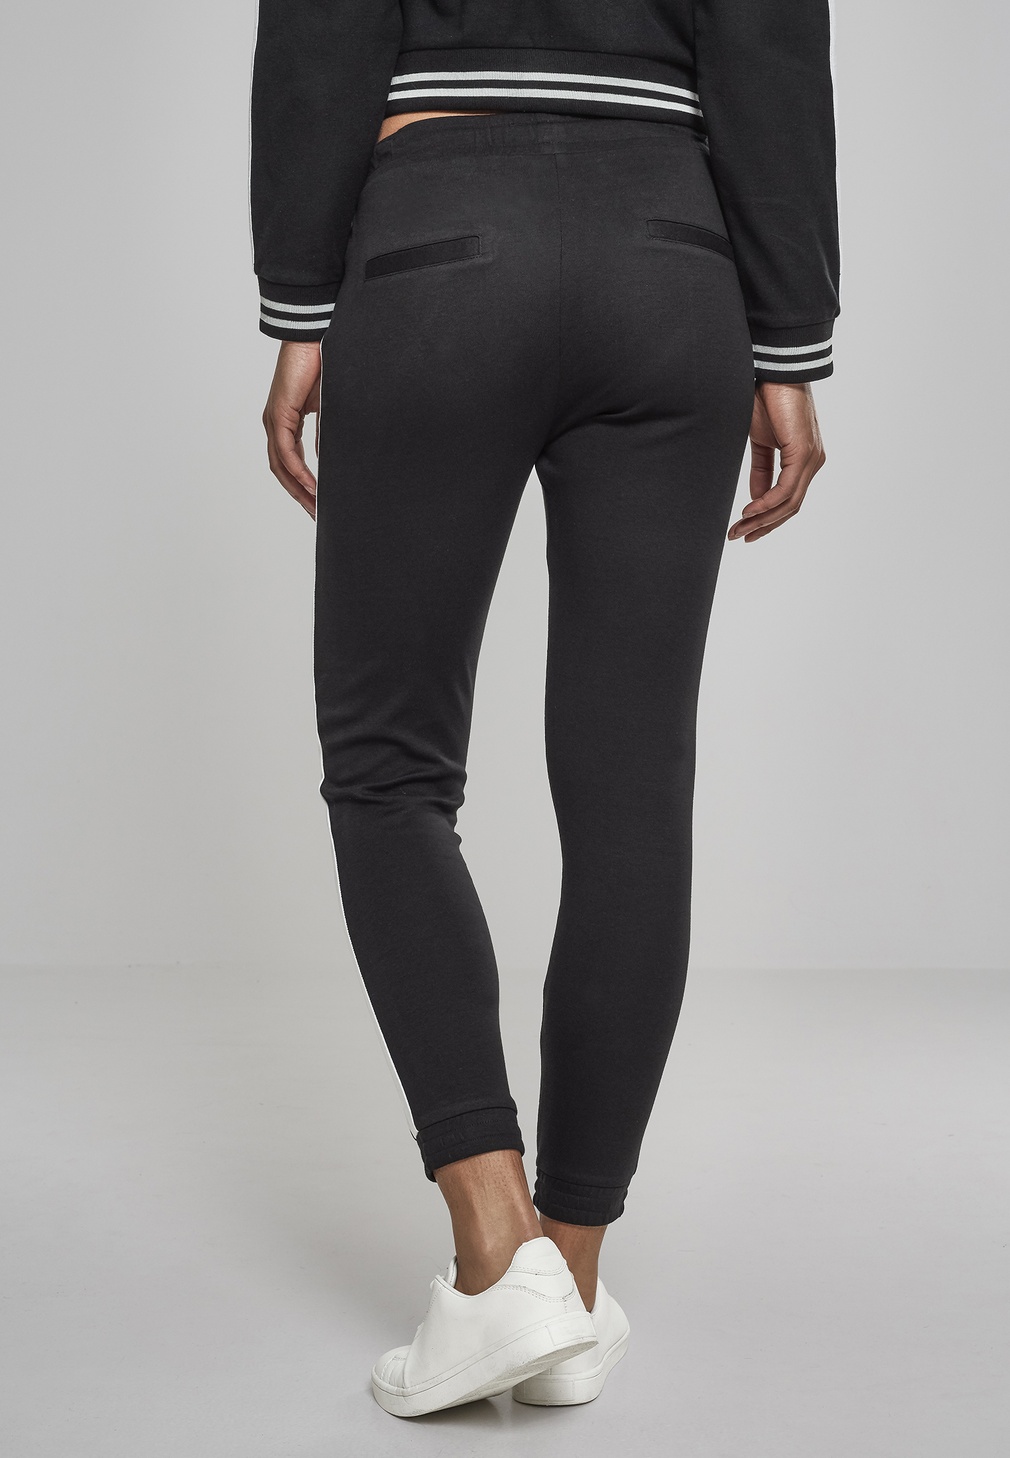 Urban Classics | | Interlock | Black/White Hosen Damen Lifestyle Jogpants Damen Ladies Sweatpants